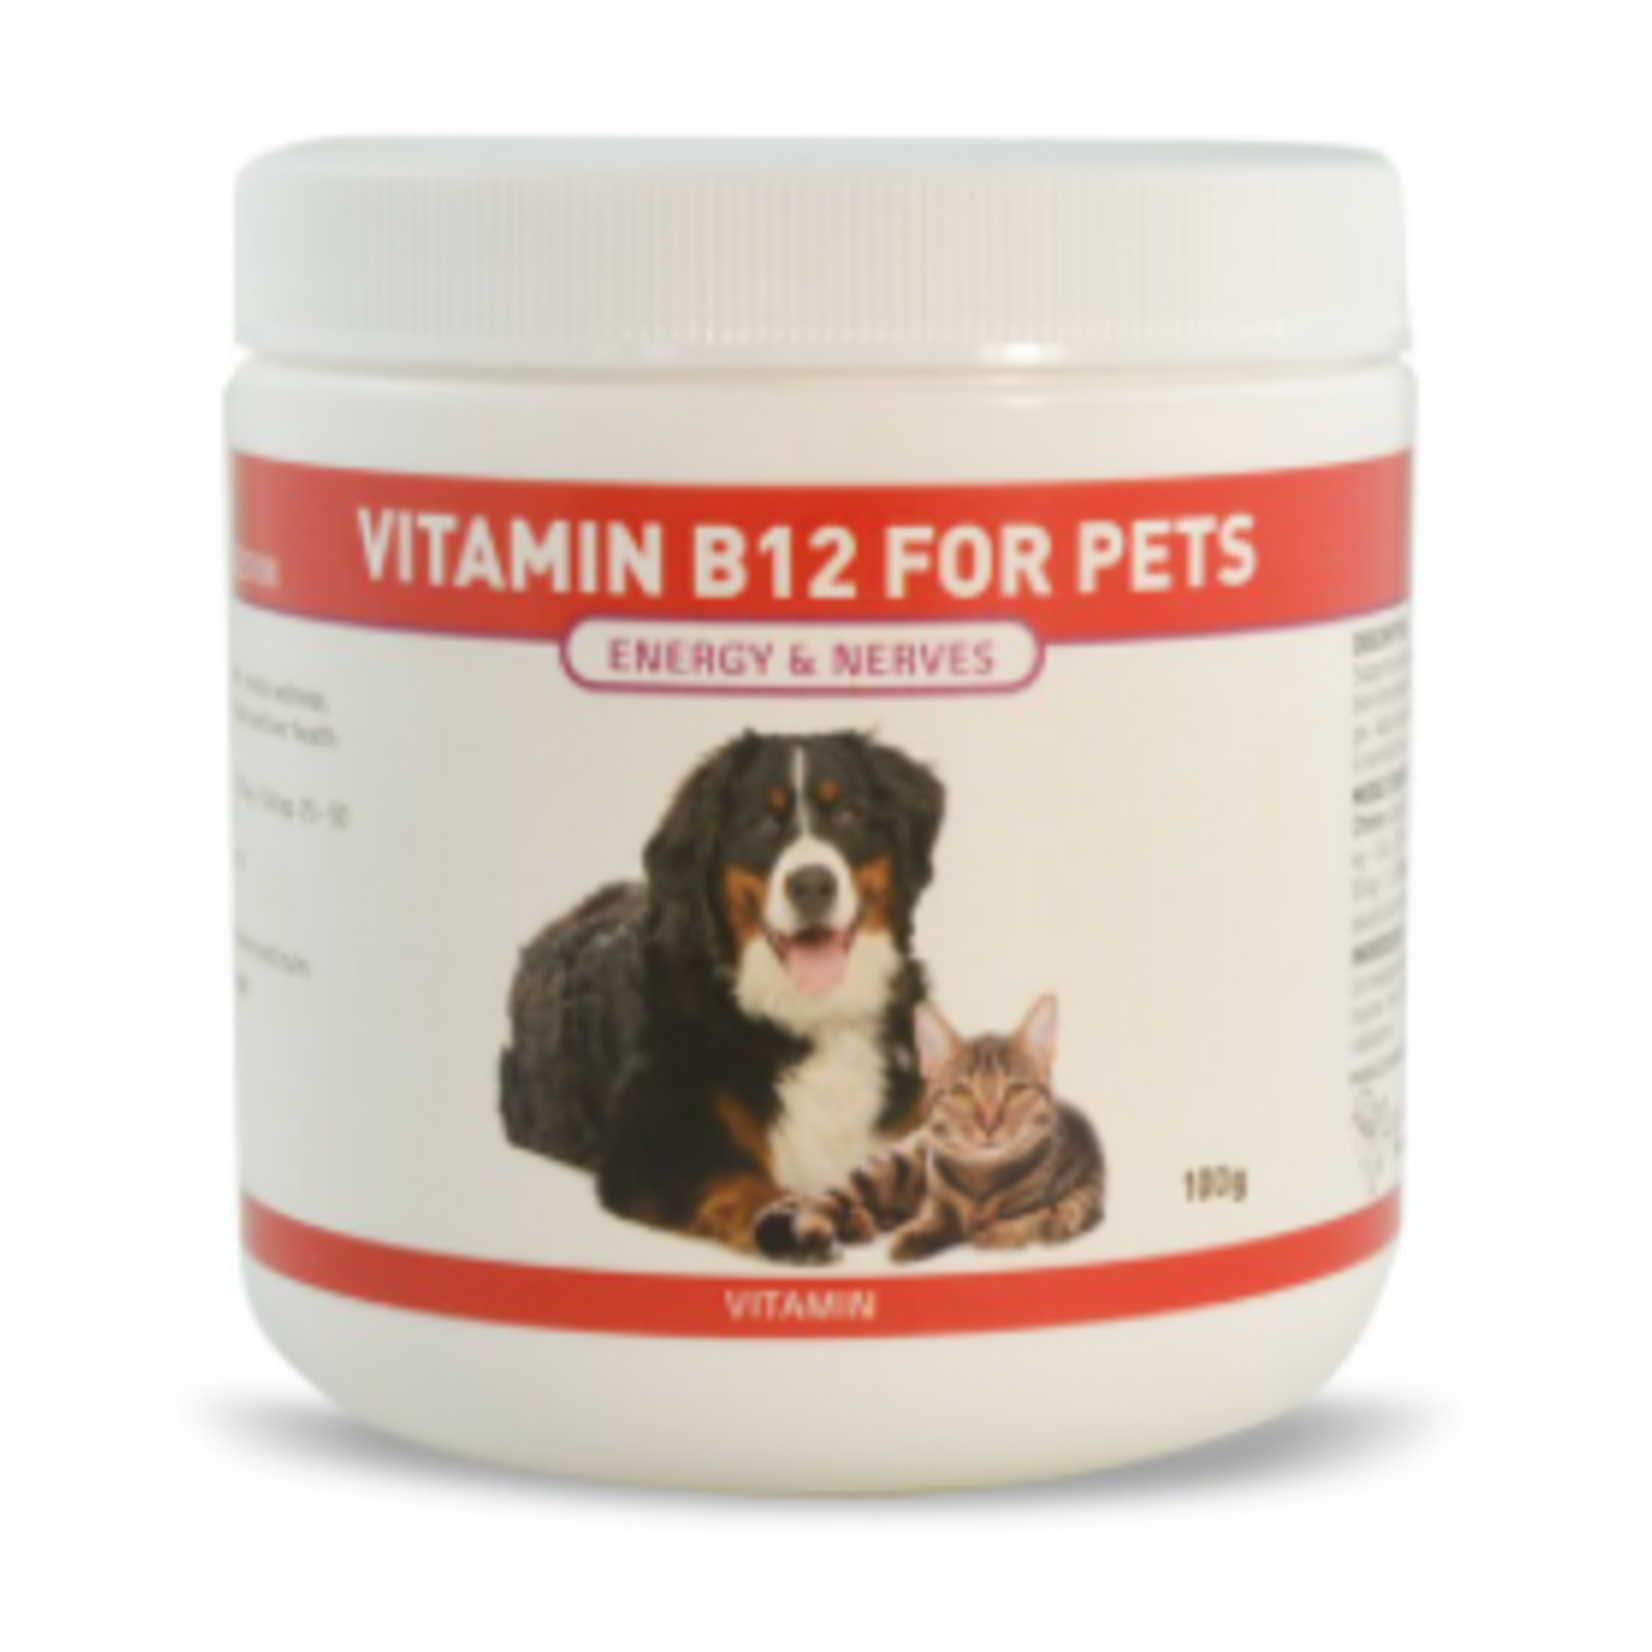 Riva's Remedies Riva's Remedies Vitamin B12 For Pets 100g